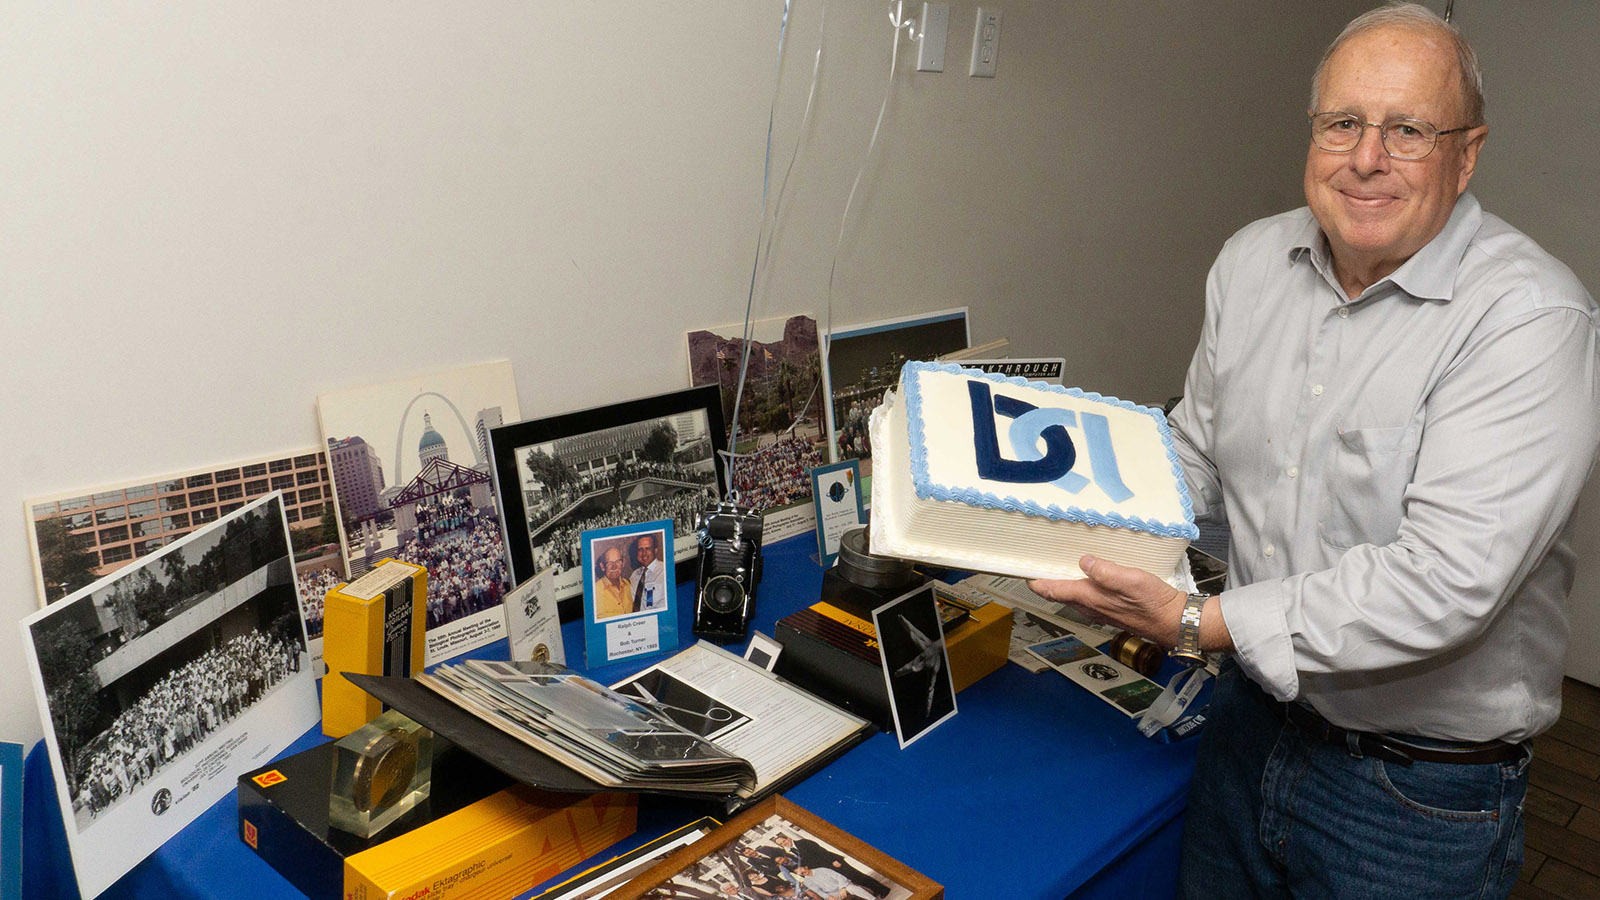 Bob Turner with BCA cake